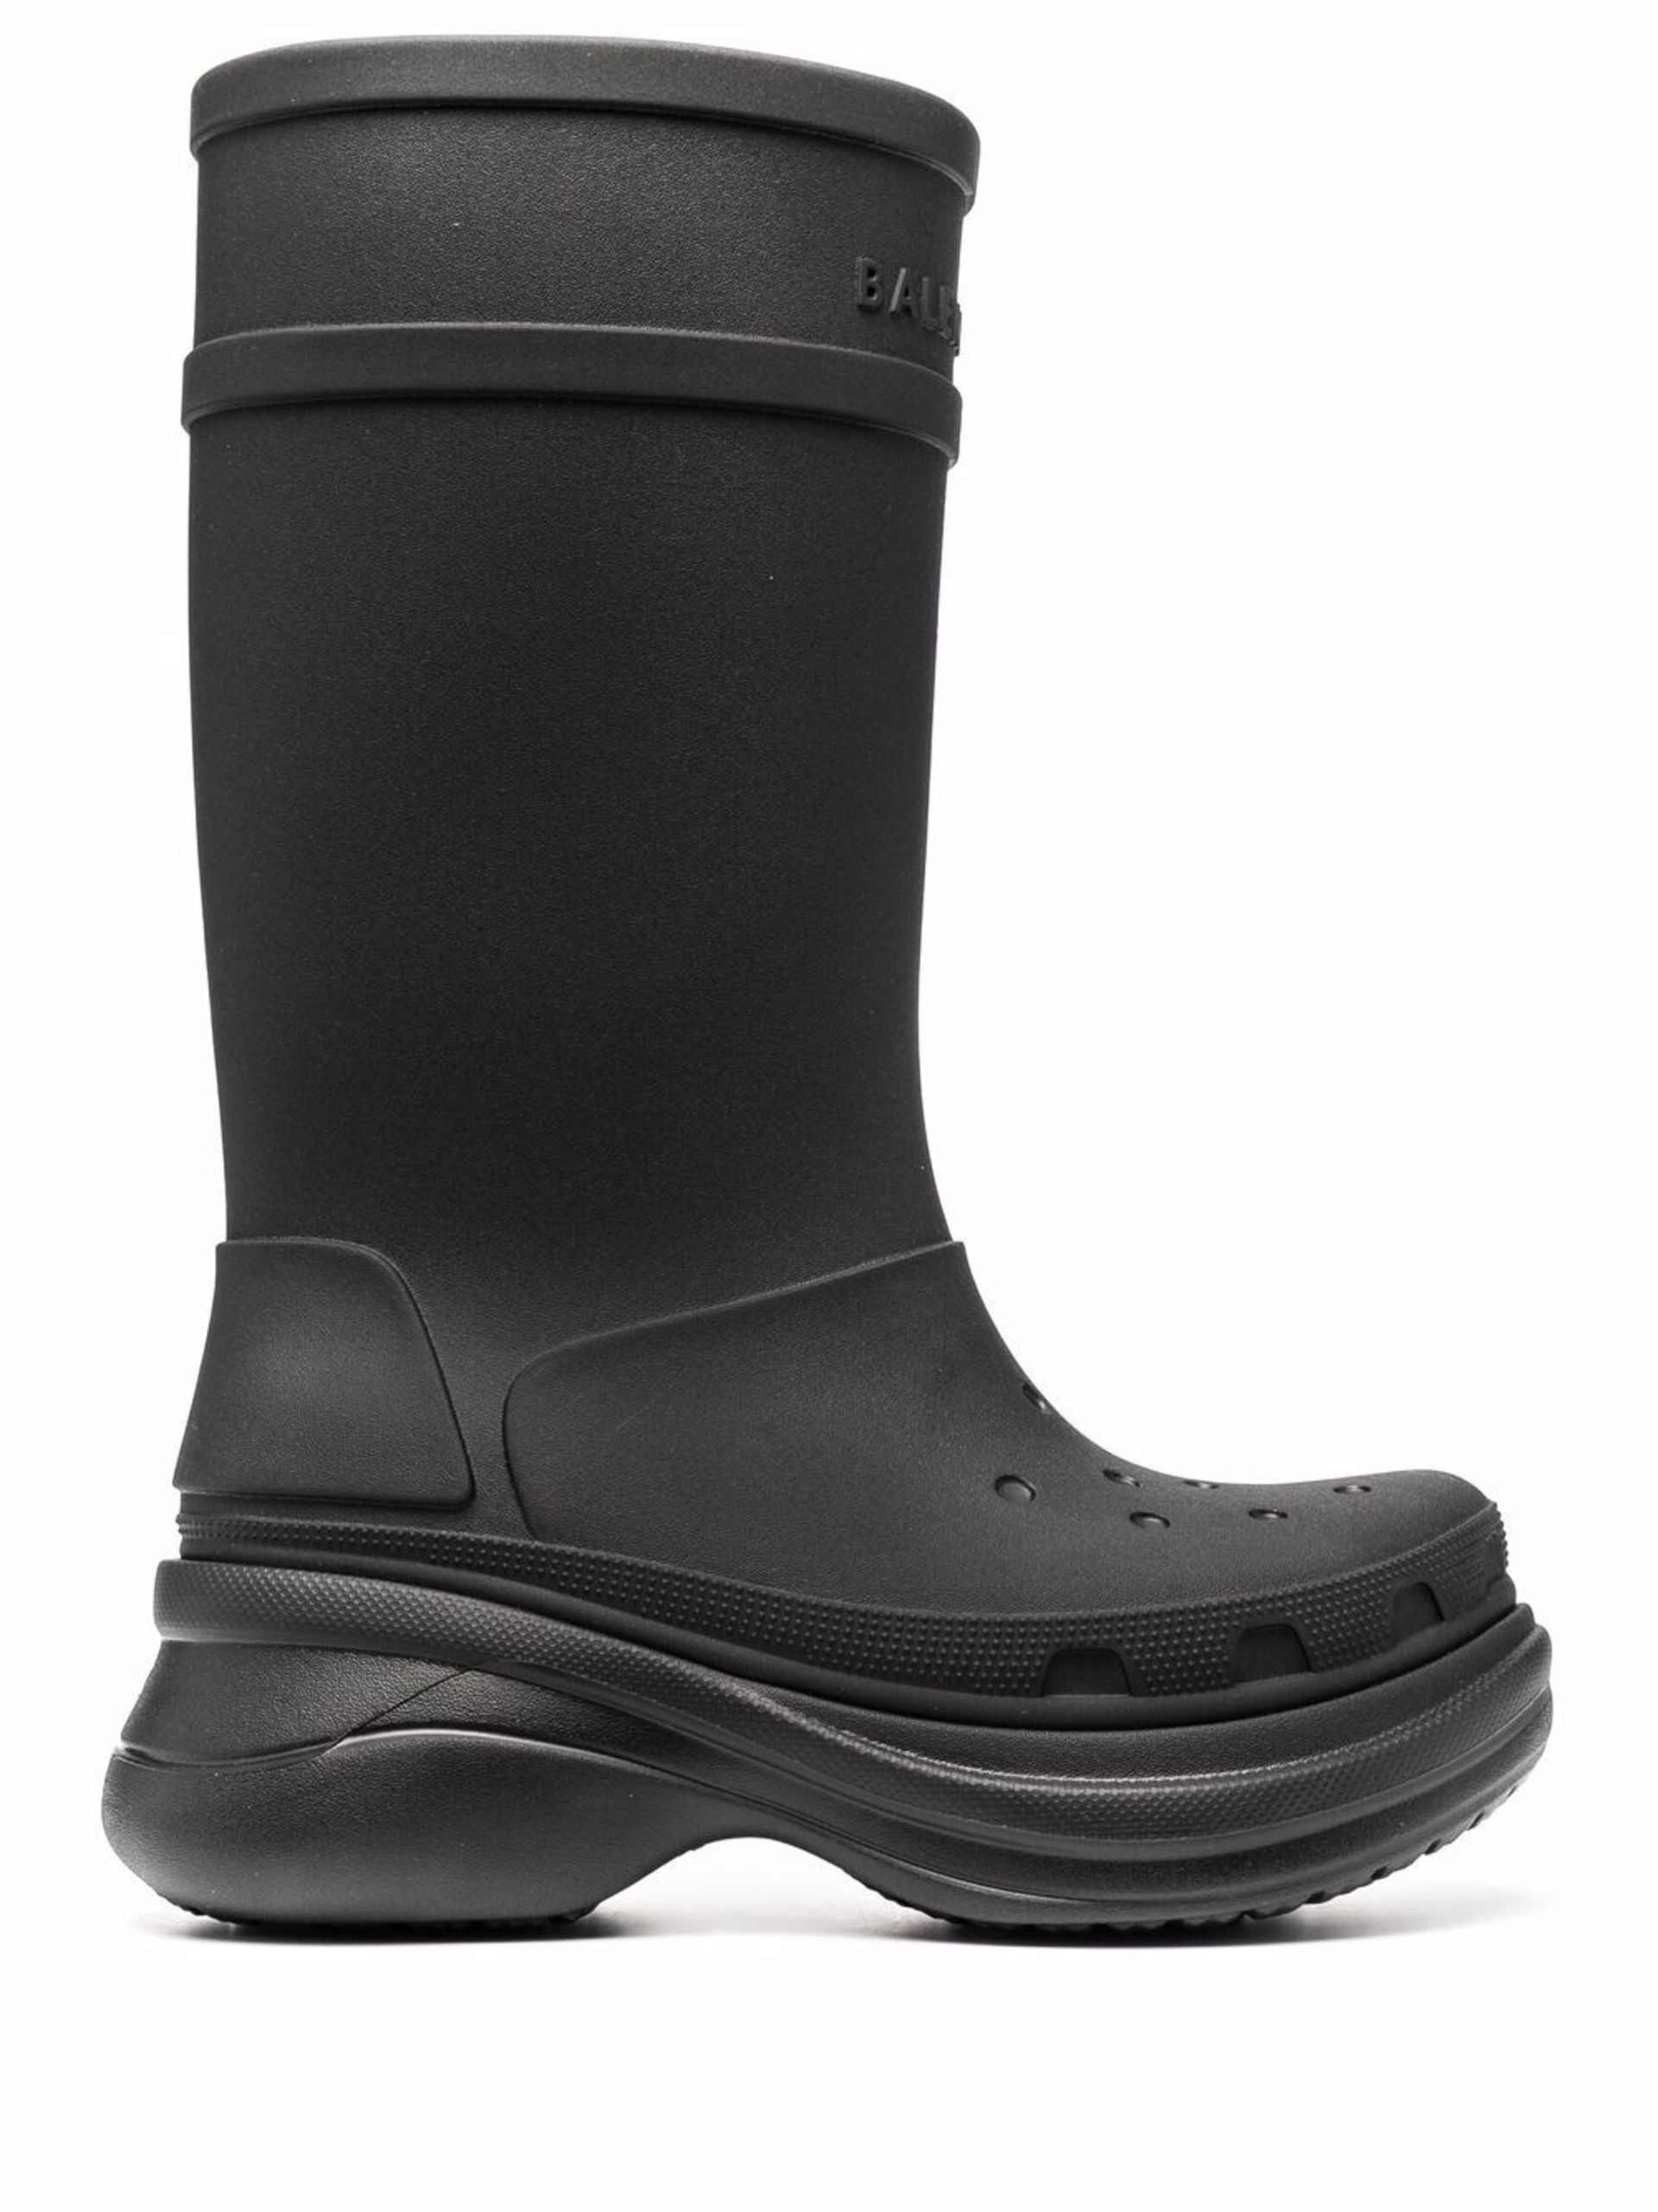 X Crocs Black Rain Boots - 1